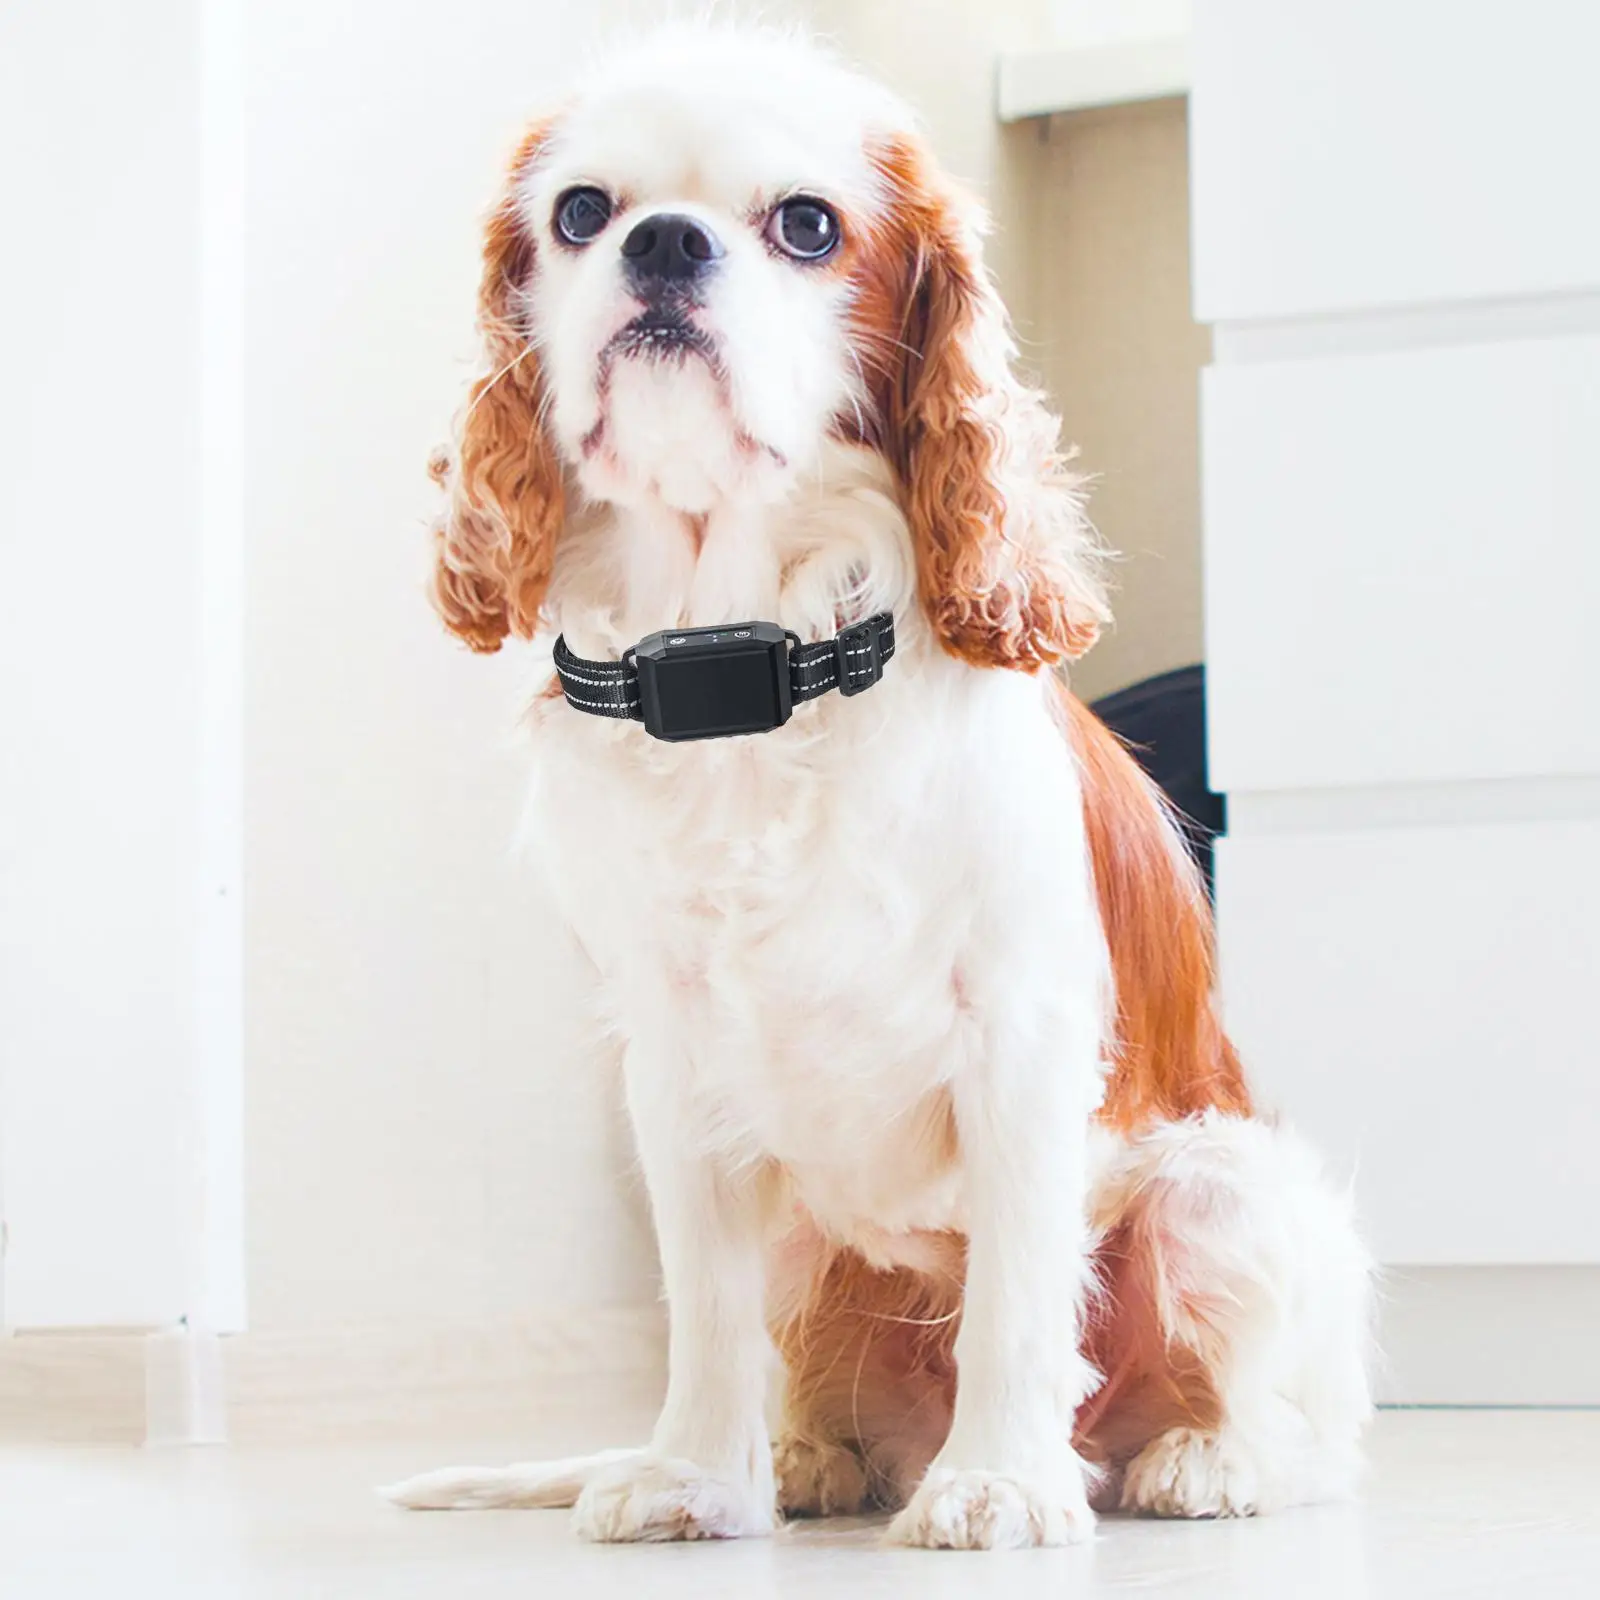 Electric Dog Bark Control Collar Barking Adjustable Behavior Correct Shock Automatic for Dog Small Medium Pet Puppy